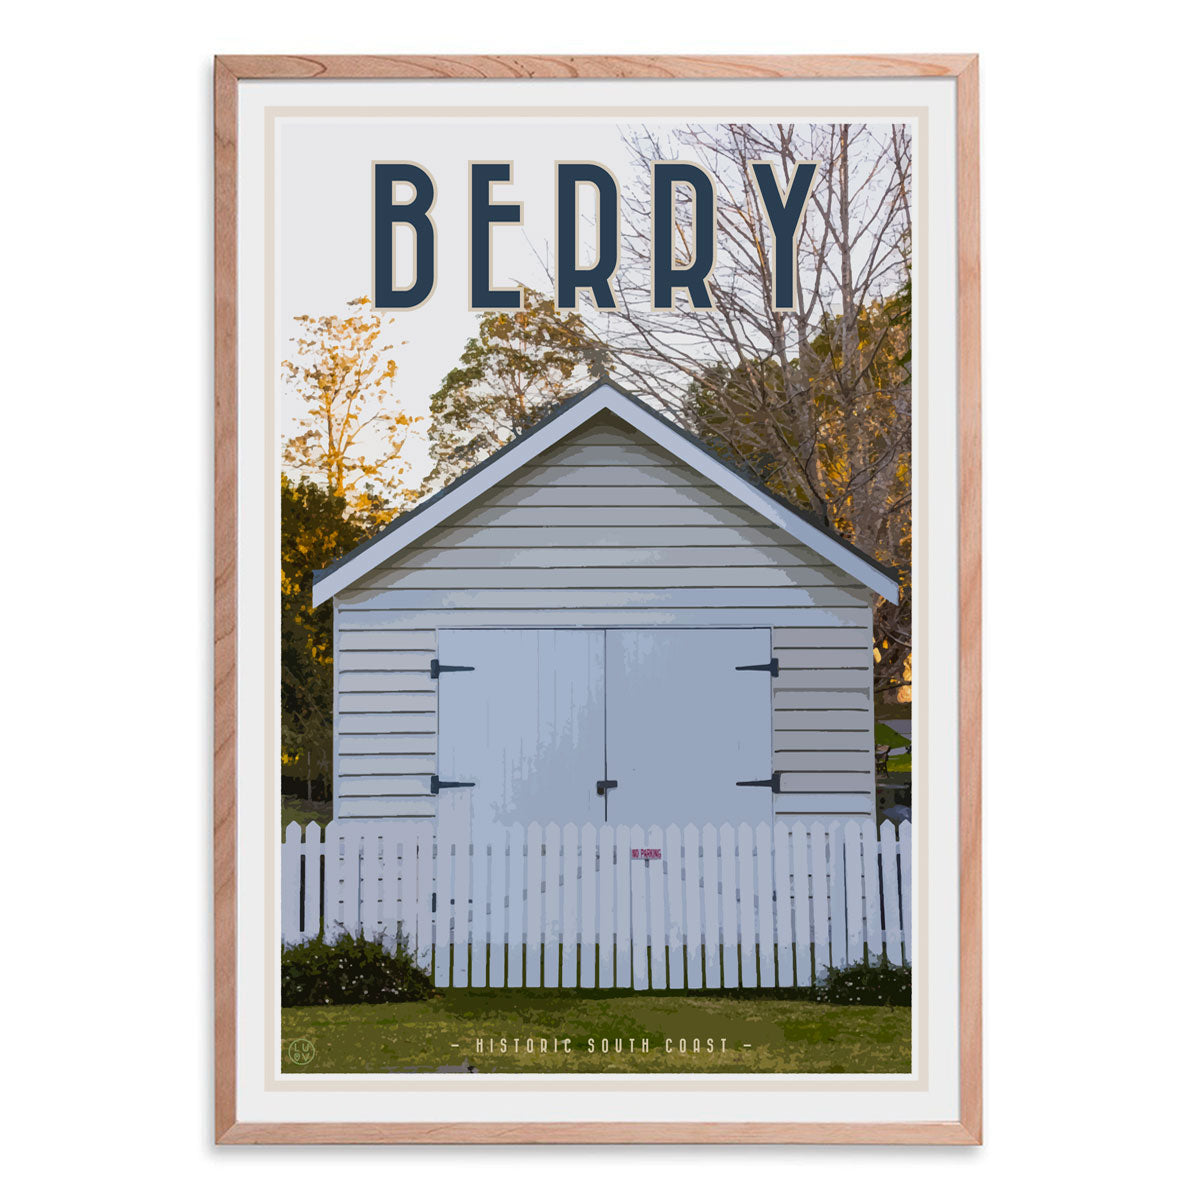 Berry south coast village travel style oak framed print